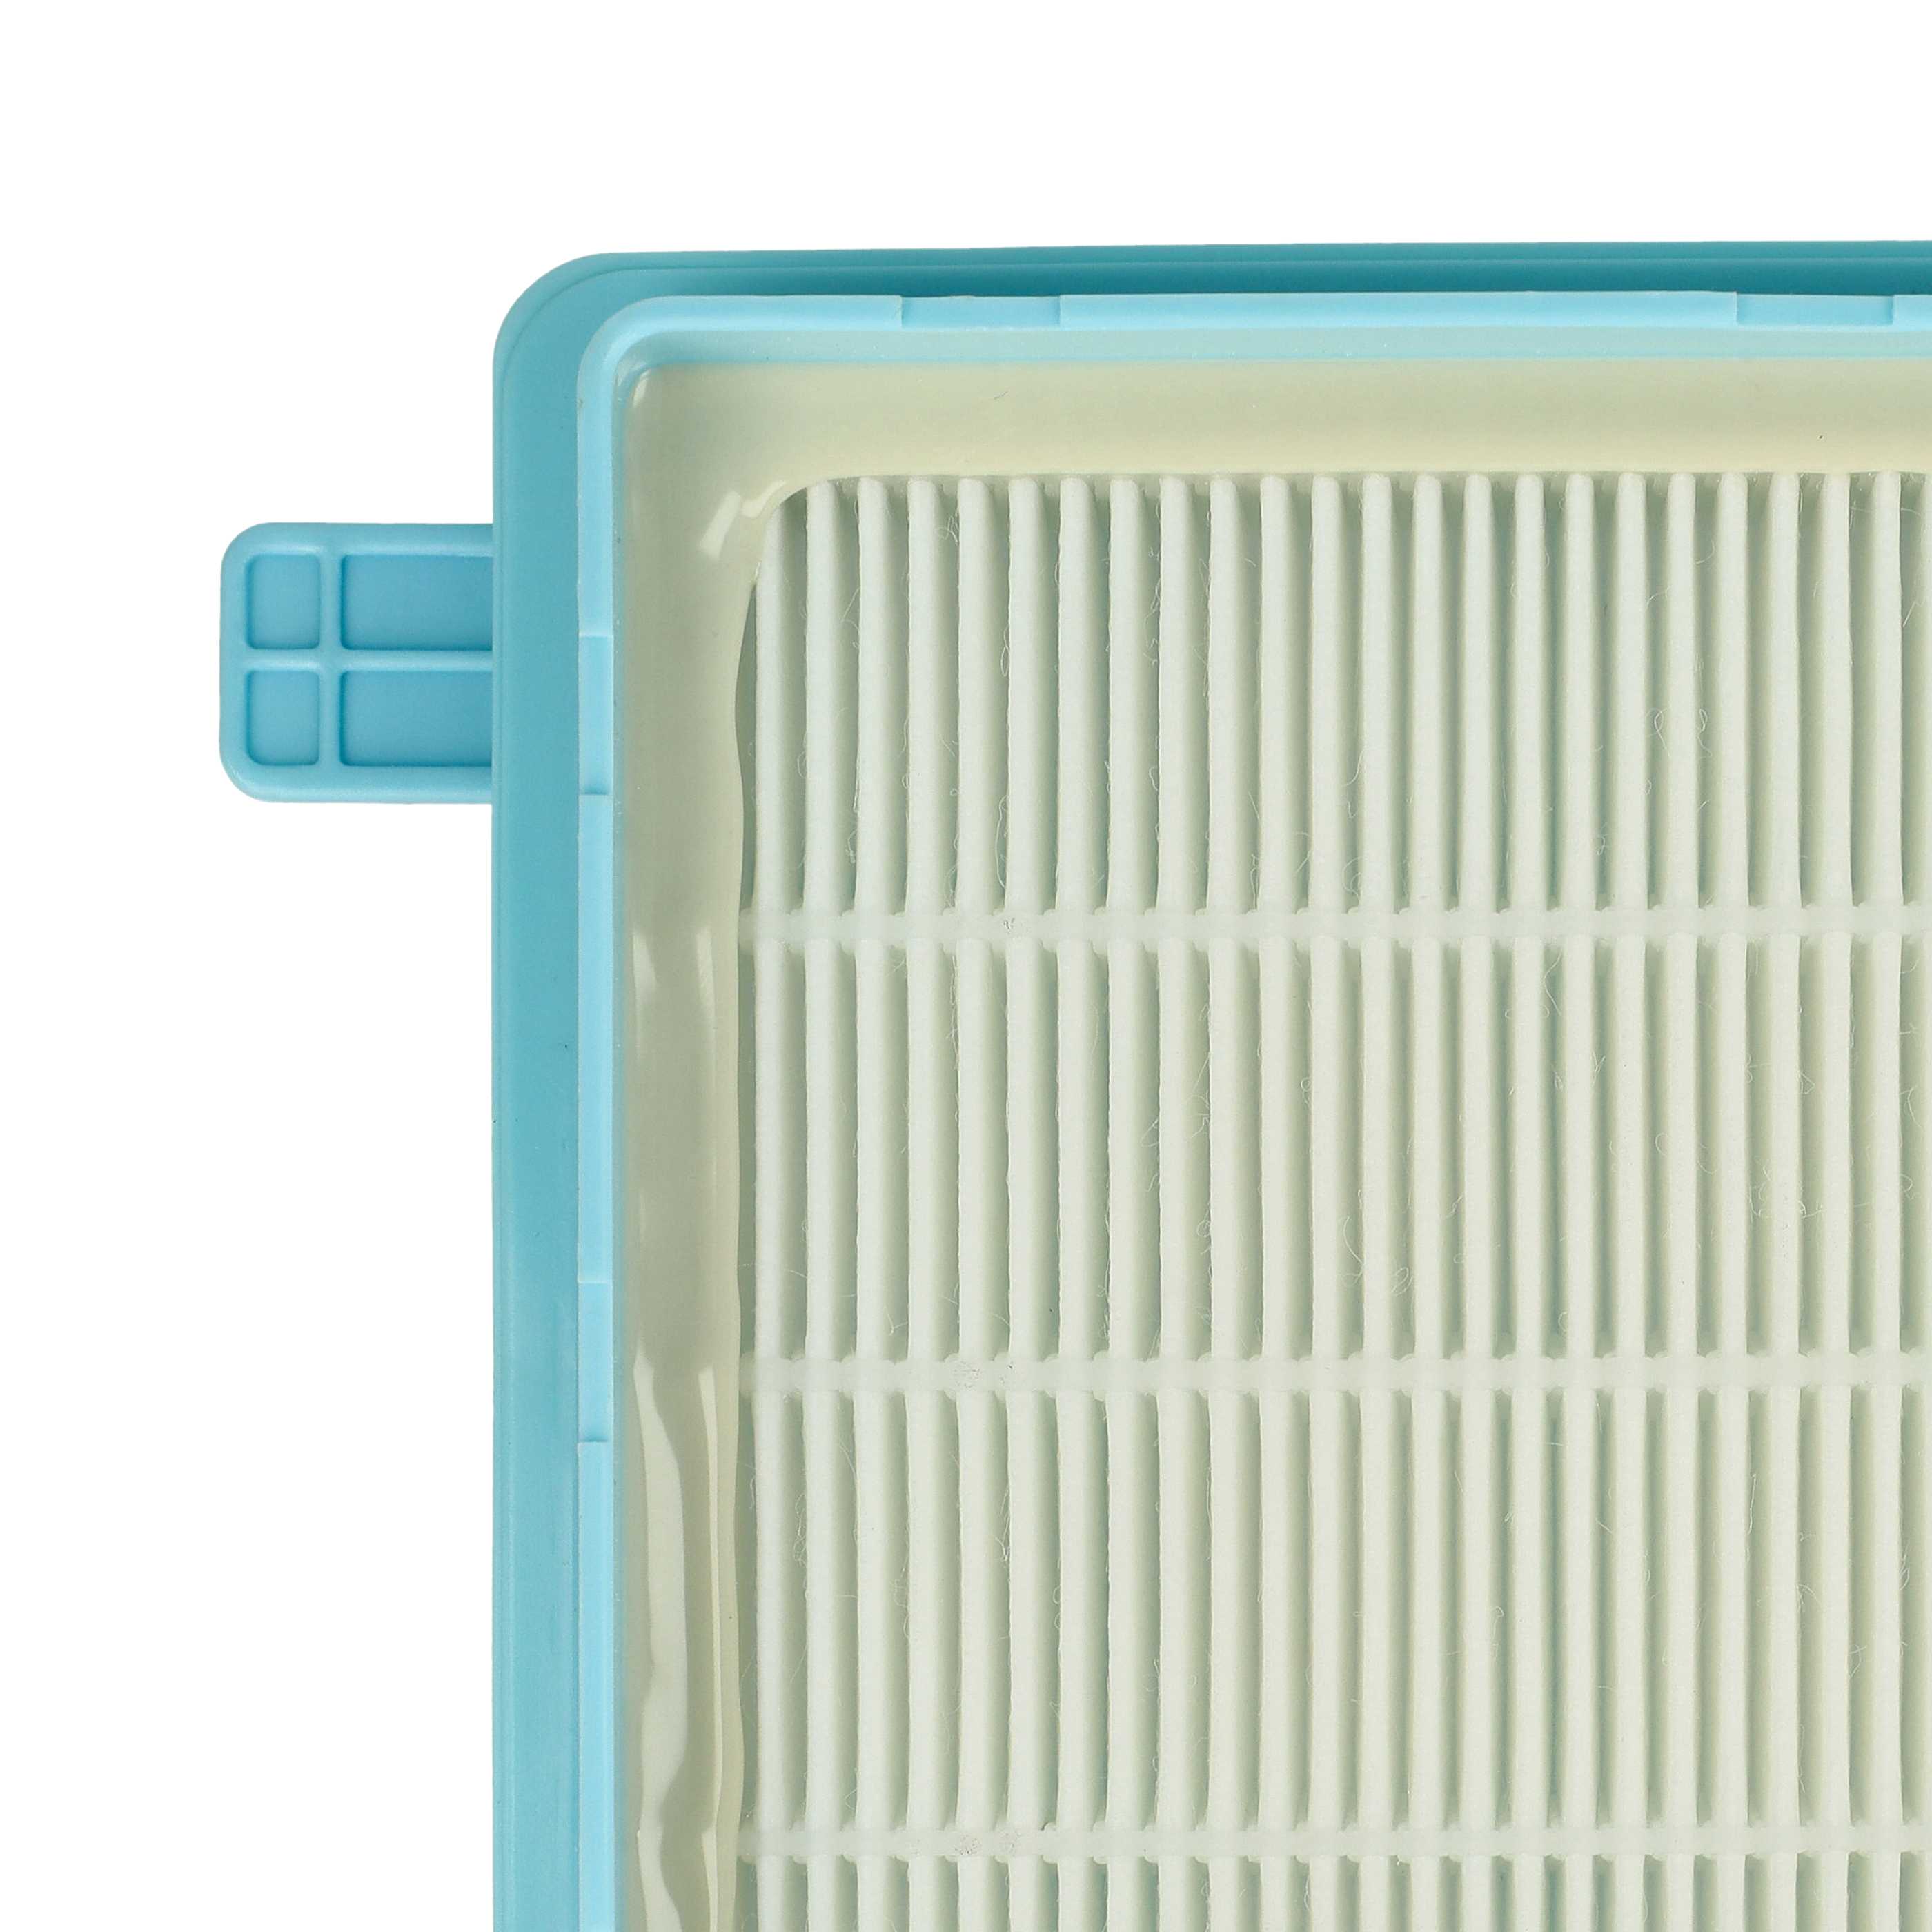 1x HEPA filter replaces Grundig 9178005623 for PhilipsVacuum Cleaner